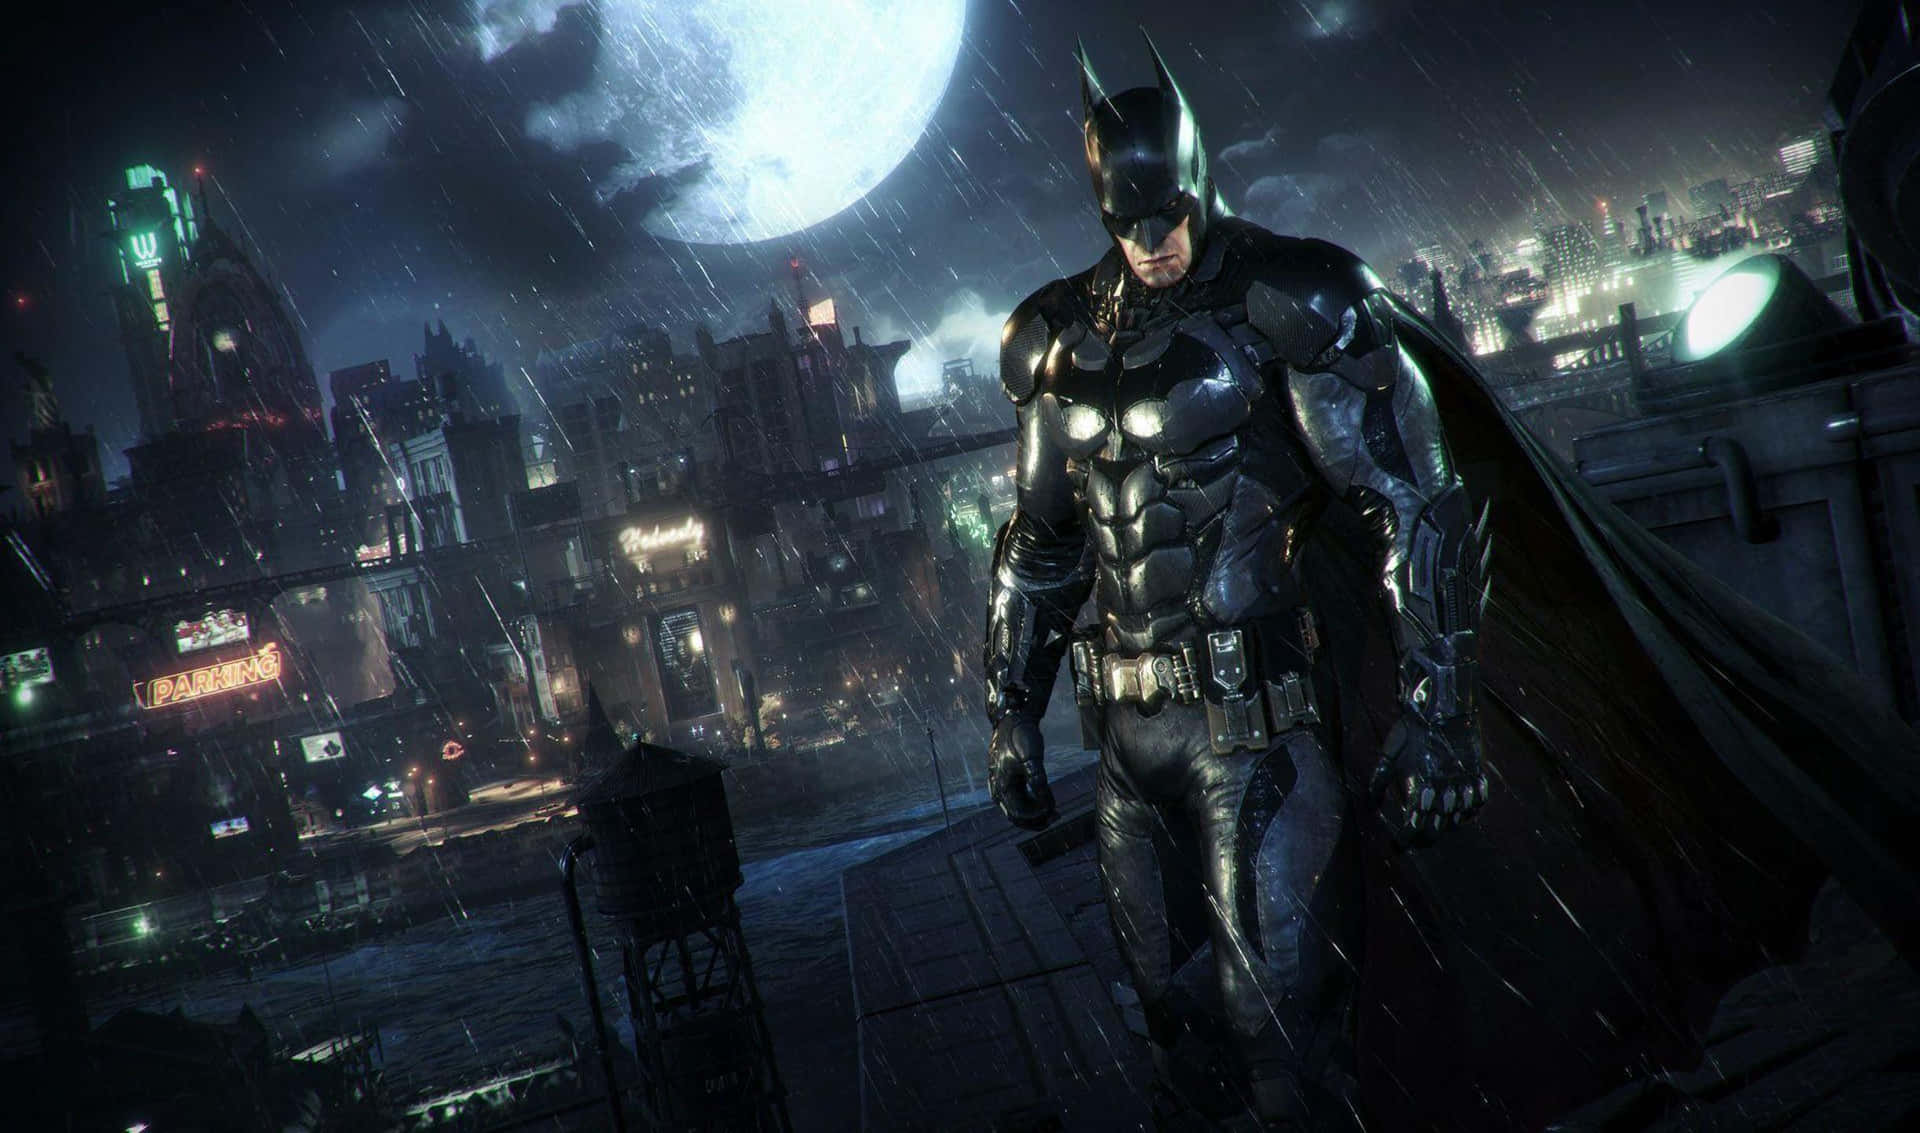 Batman in Arkham City, Ready to Fight